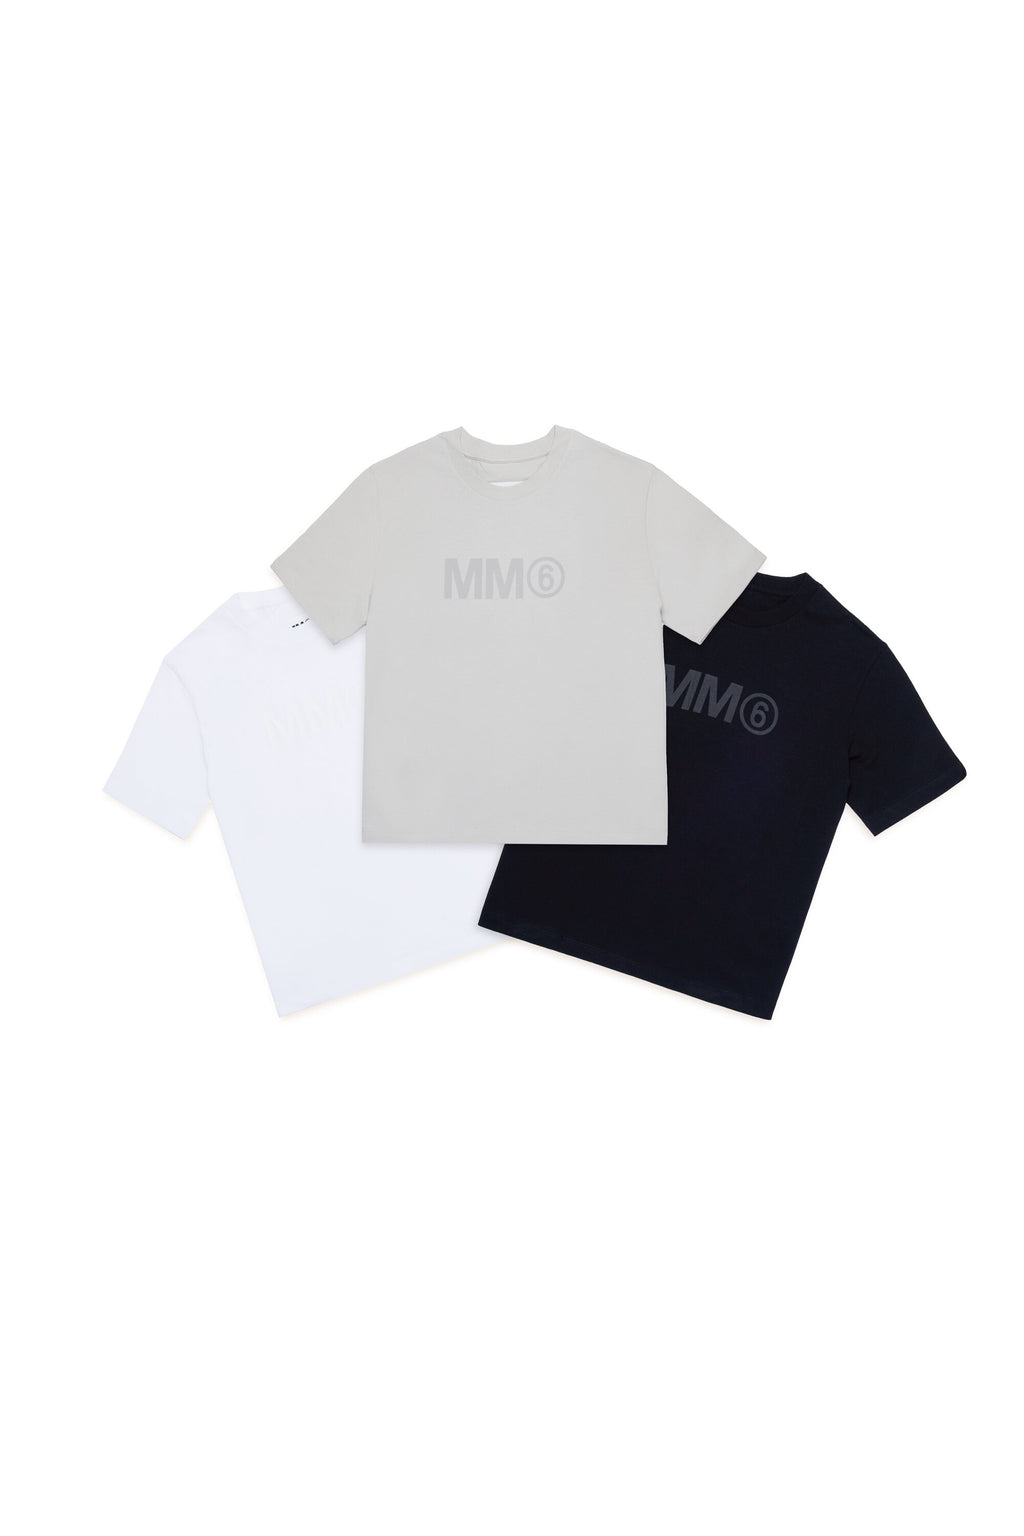 MM6 branded T-shirt - 3-piece set